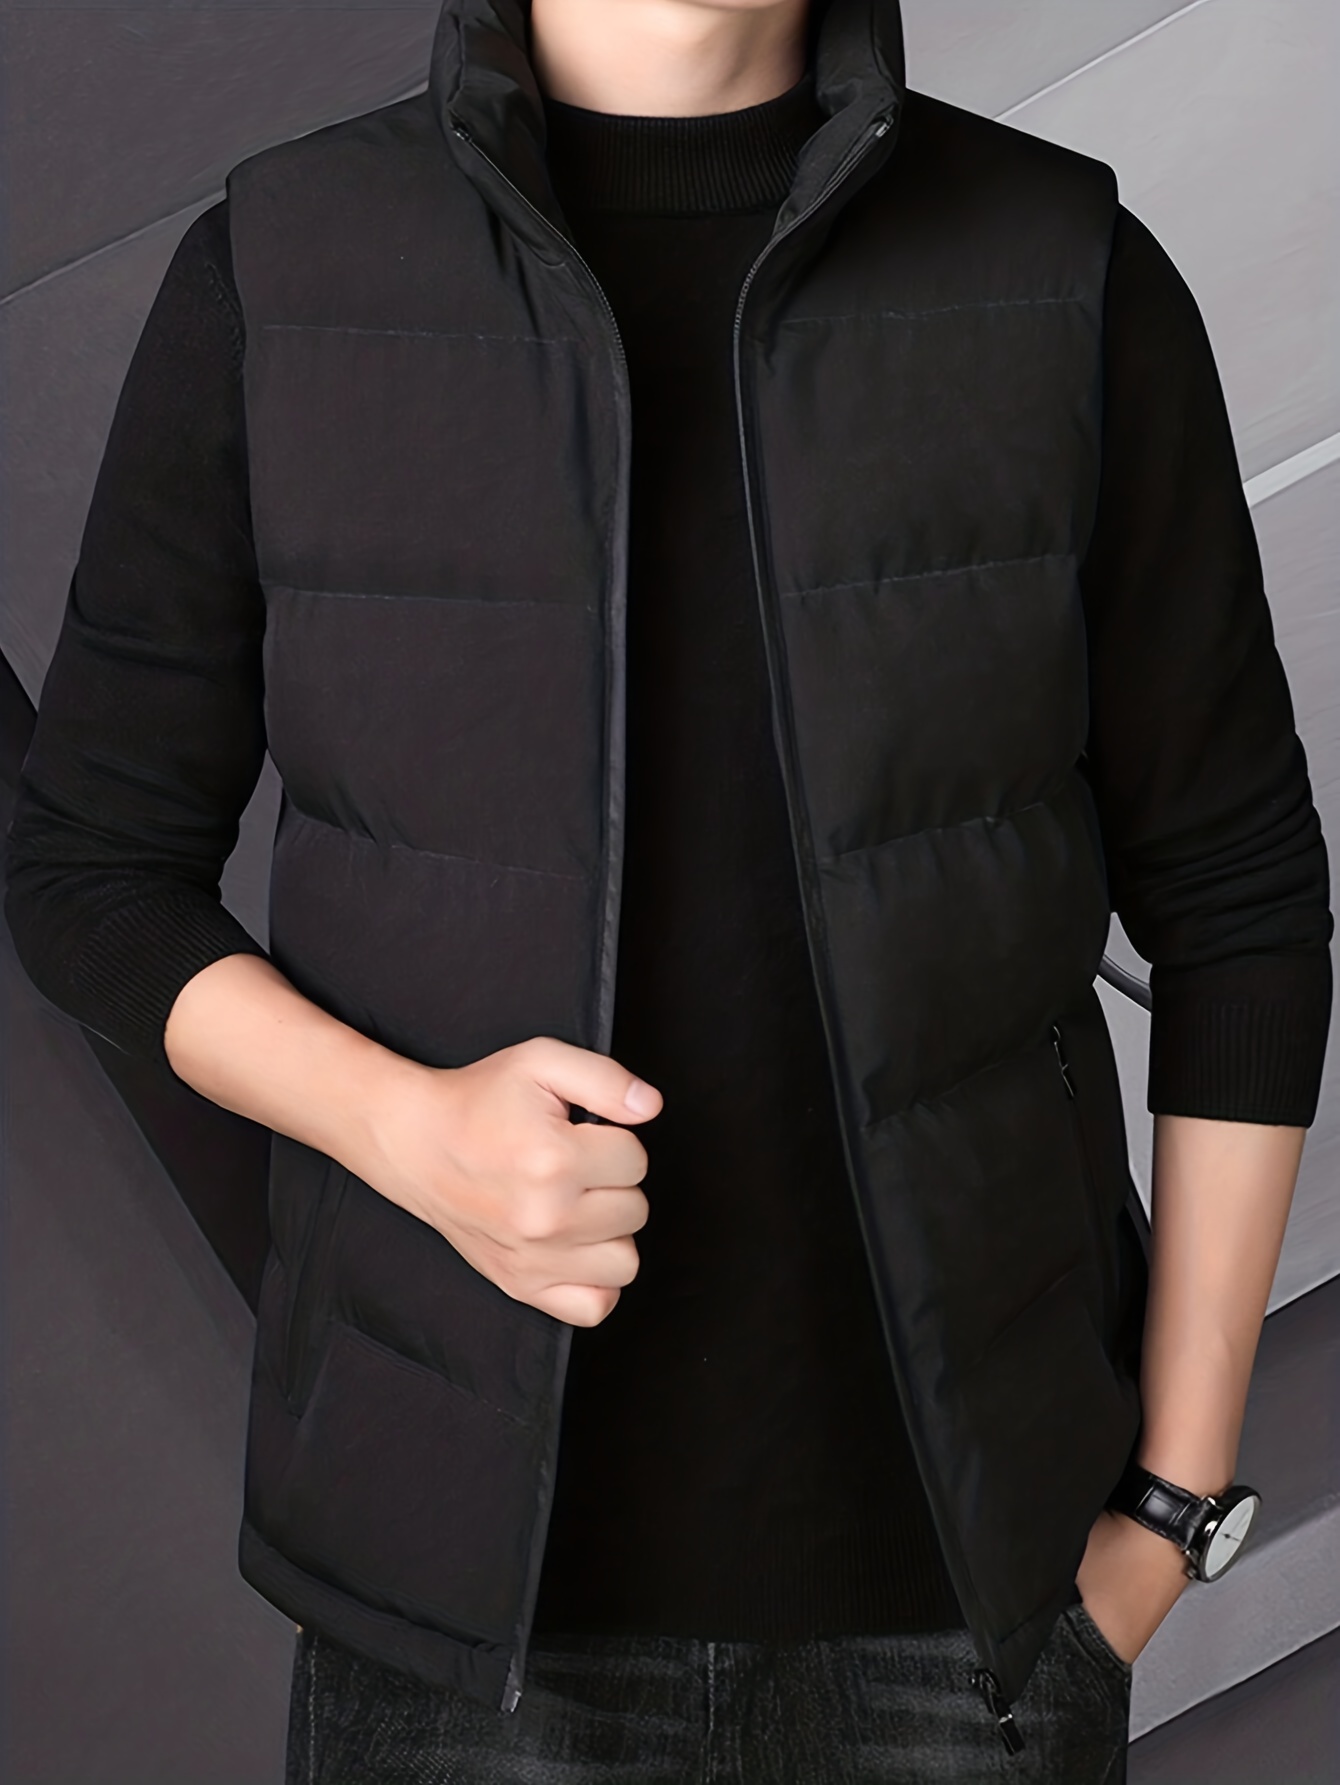 Warm Jackets For Women 2022 Winter Drawstring Coat Brown Quilted Crop Top Puffer  Vest Zipper Streetwear sleeveless Outerwear